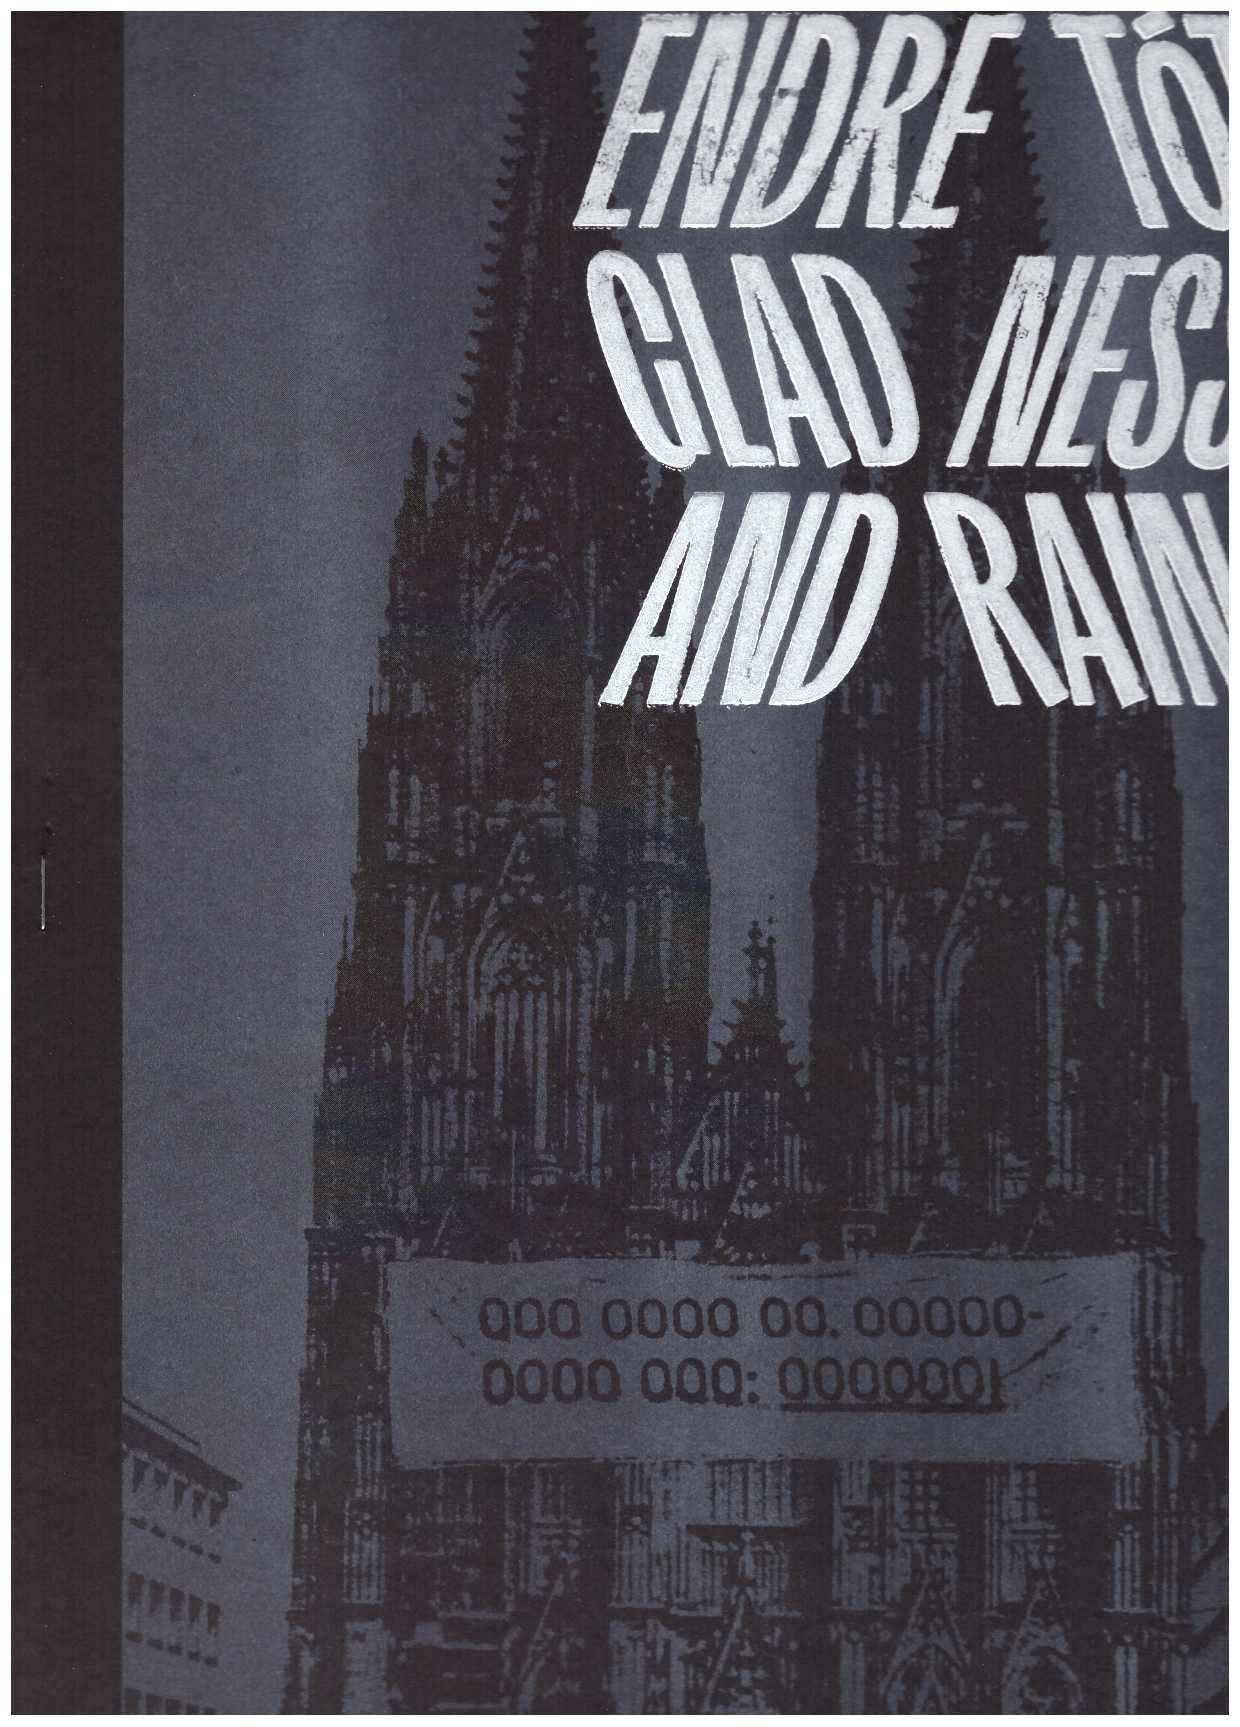 TÓT, Endre - Gladness and Rain